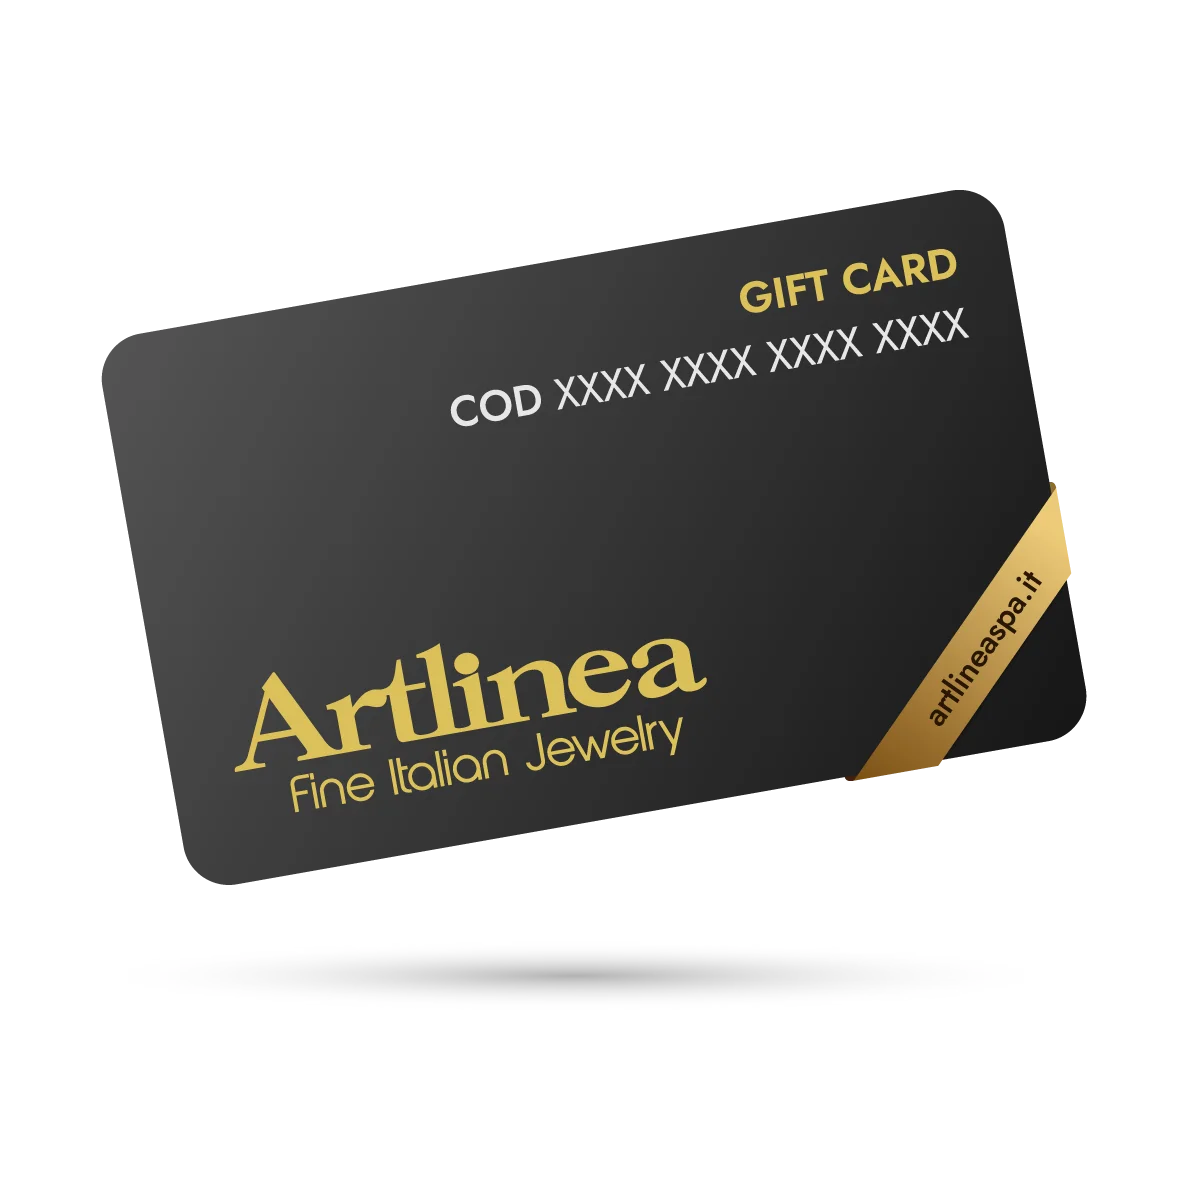 Artlinea Gift Card